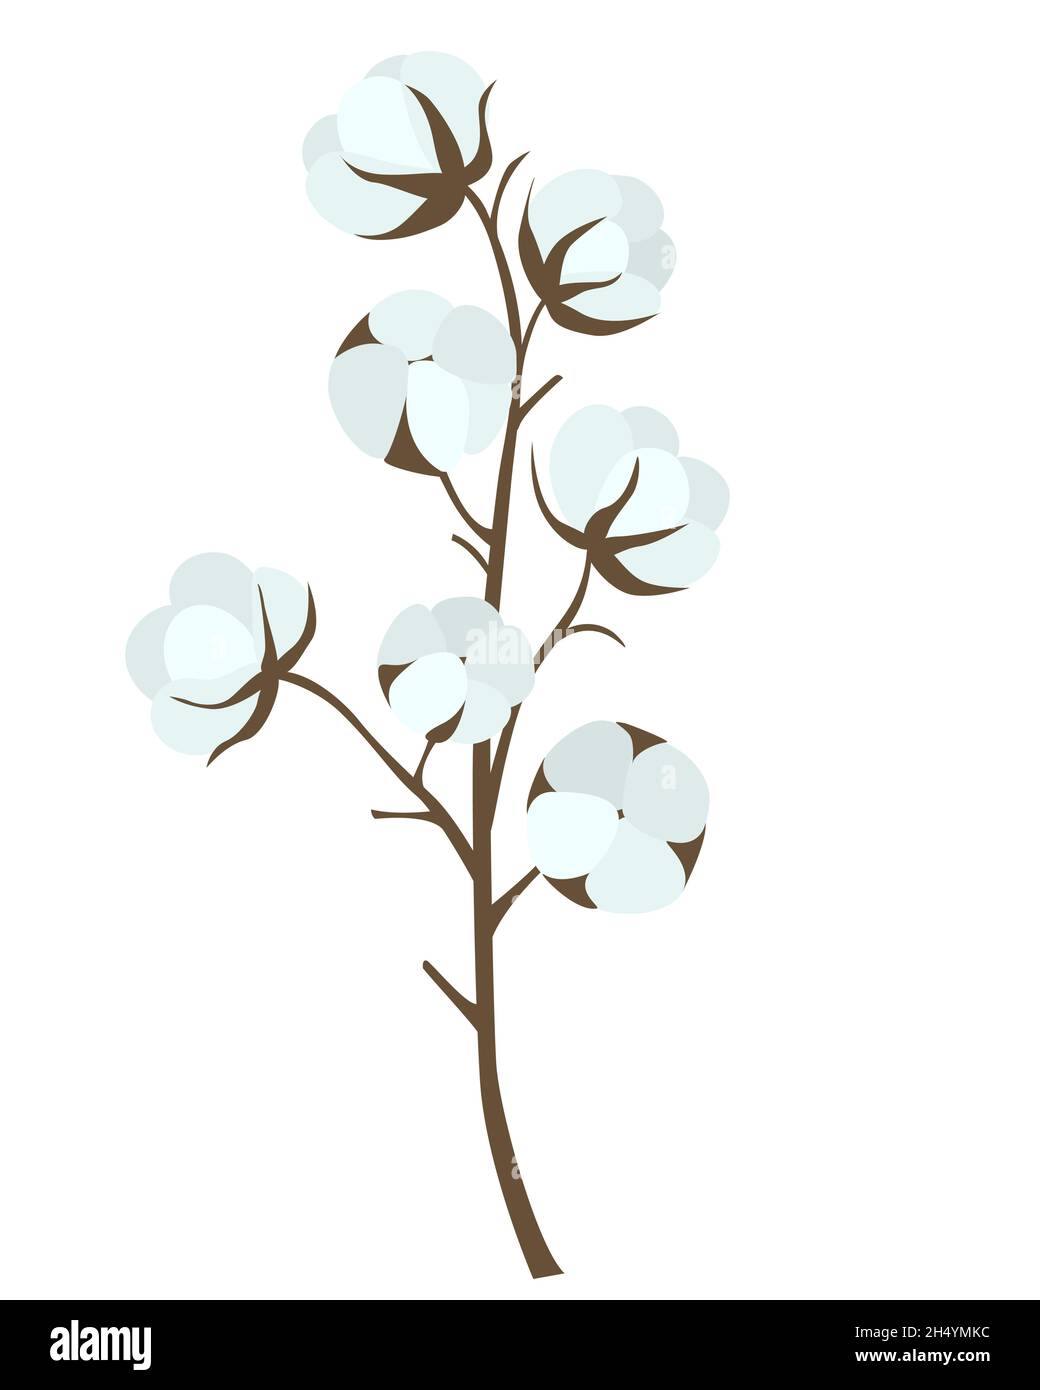 Illustration of cotton plant sketch Stock Photo  Alamy